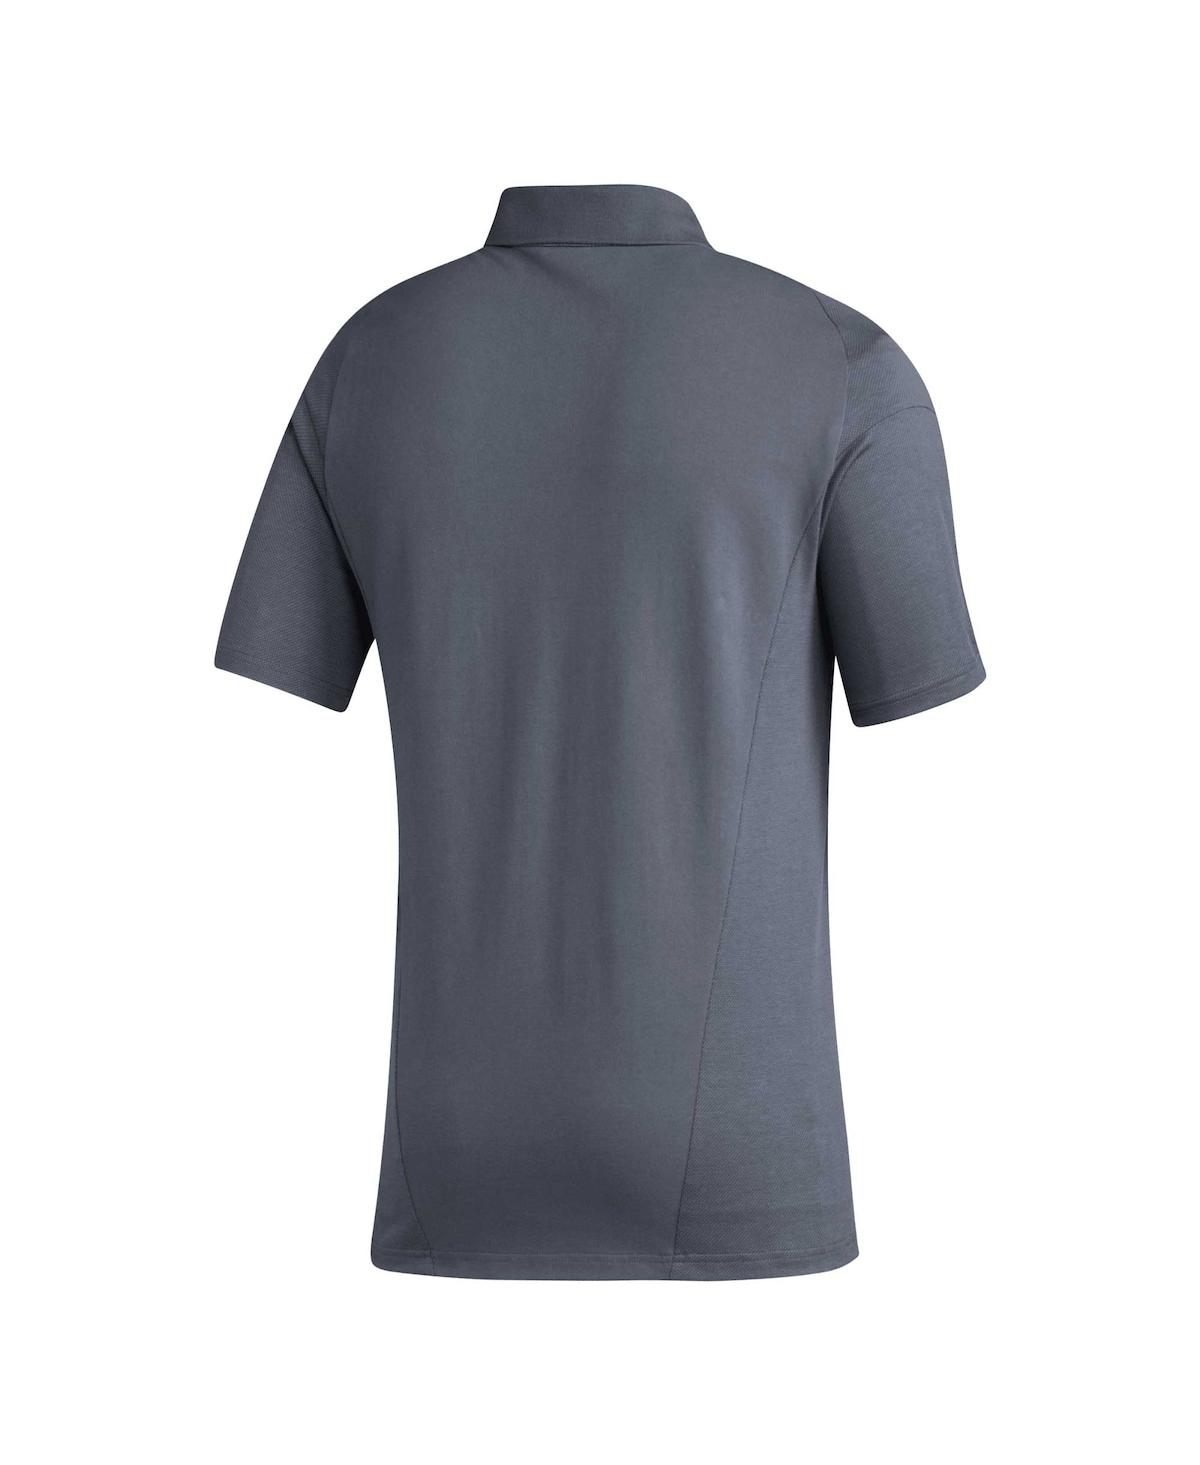 Shop Adidas Originals Men's Adidas Gray Real Salt Lake 2023 On-field Training Polo Shirt